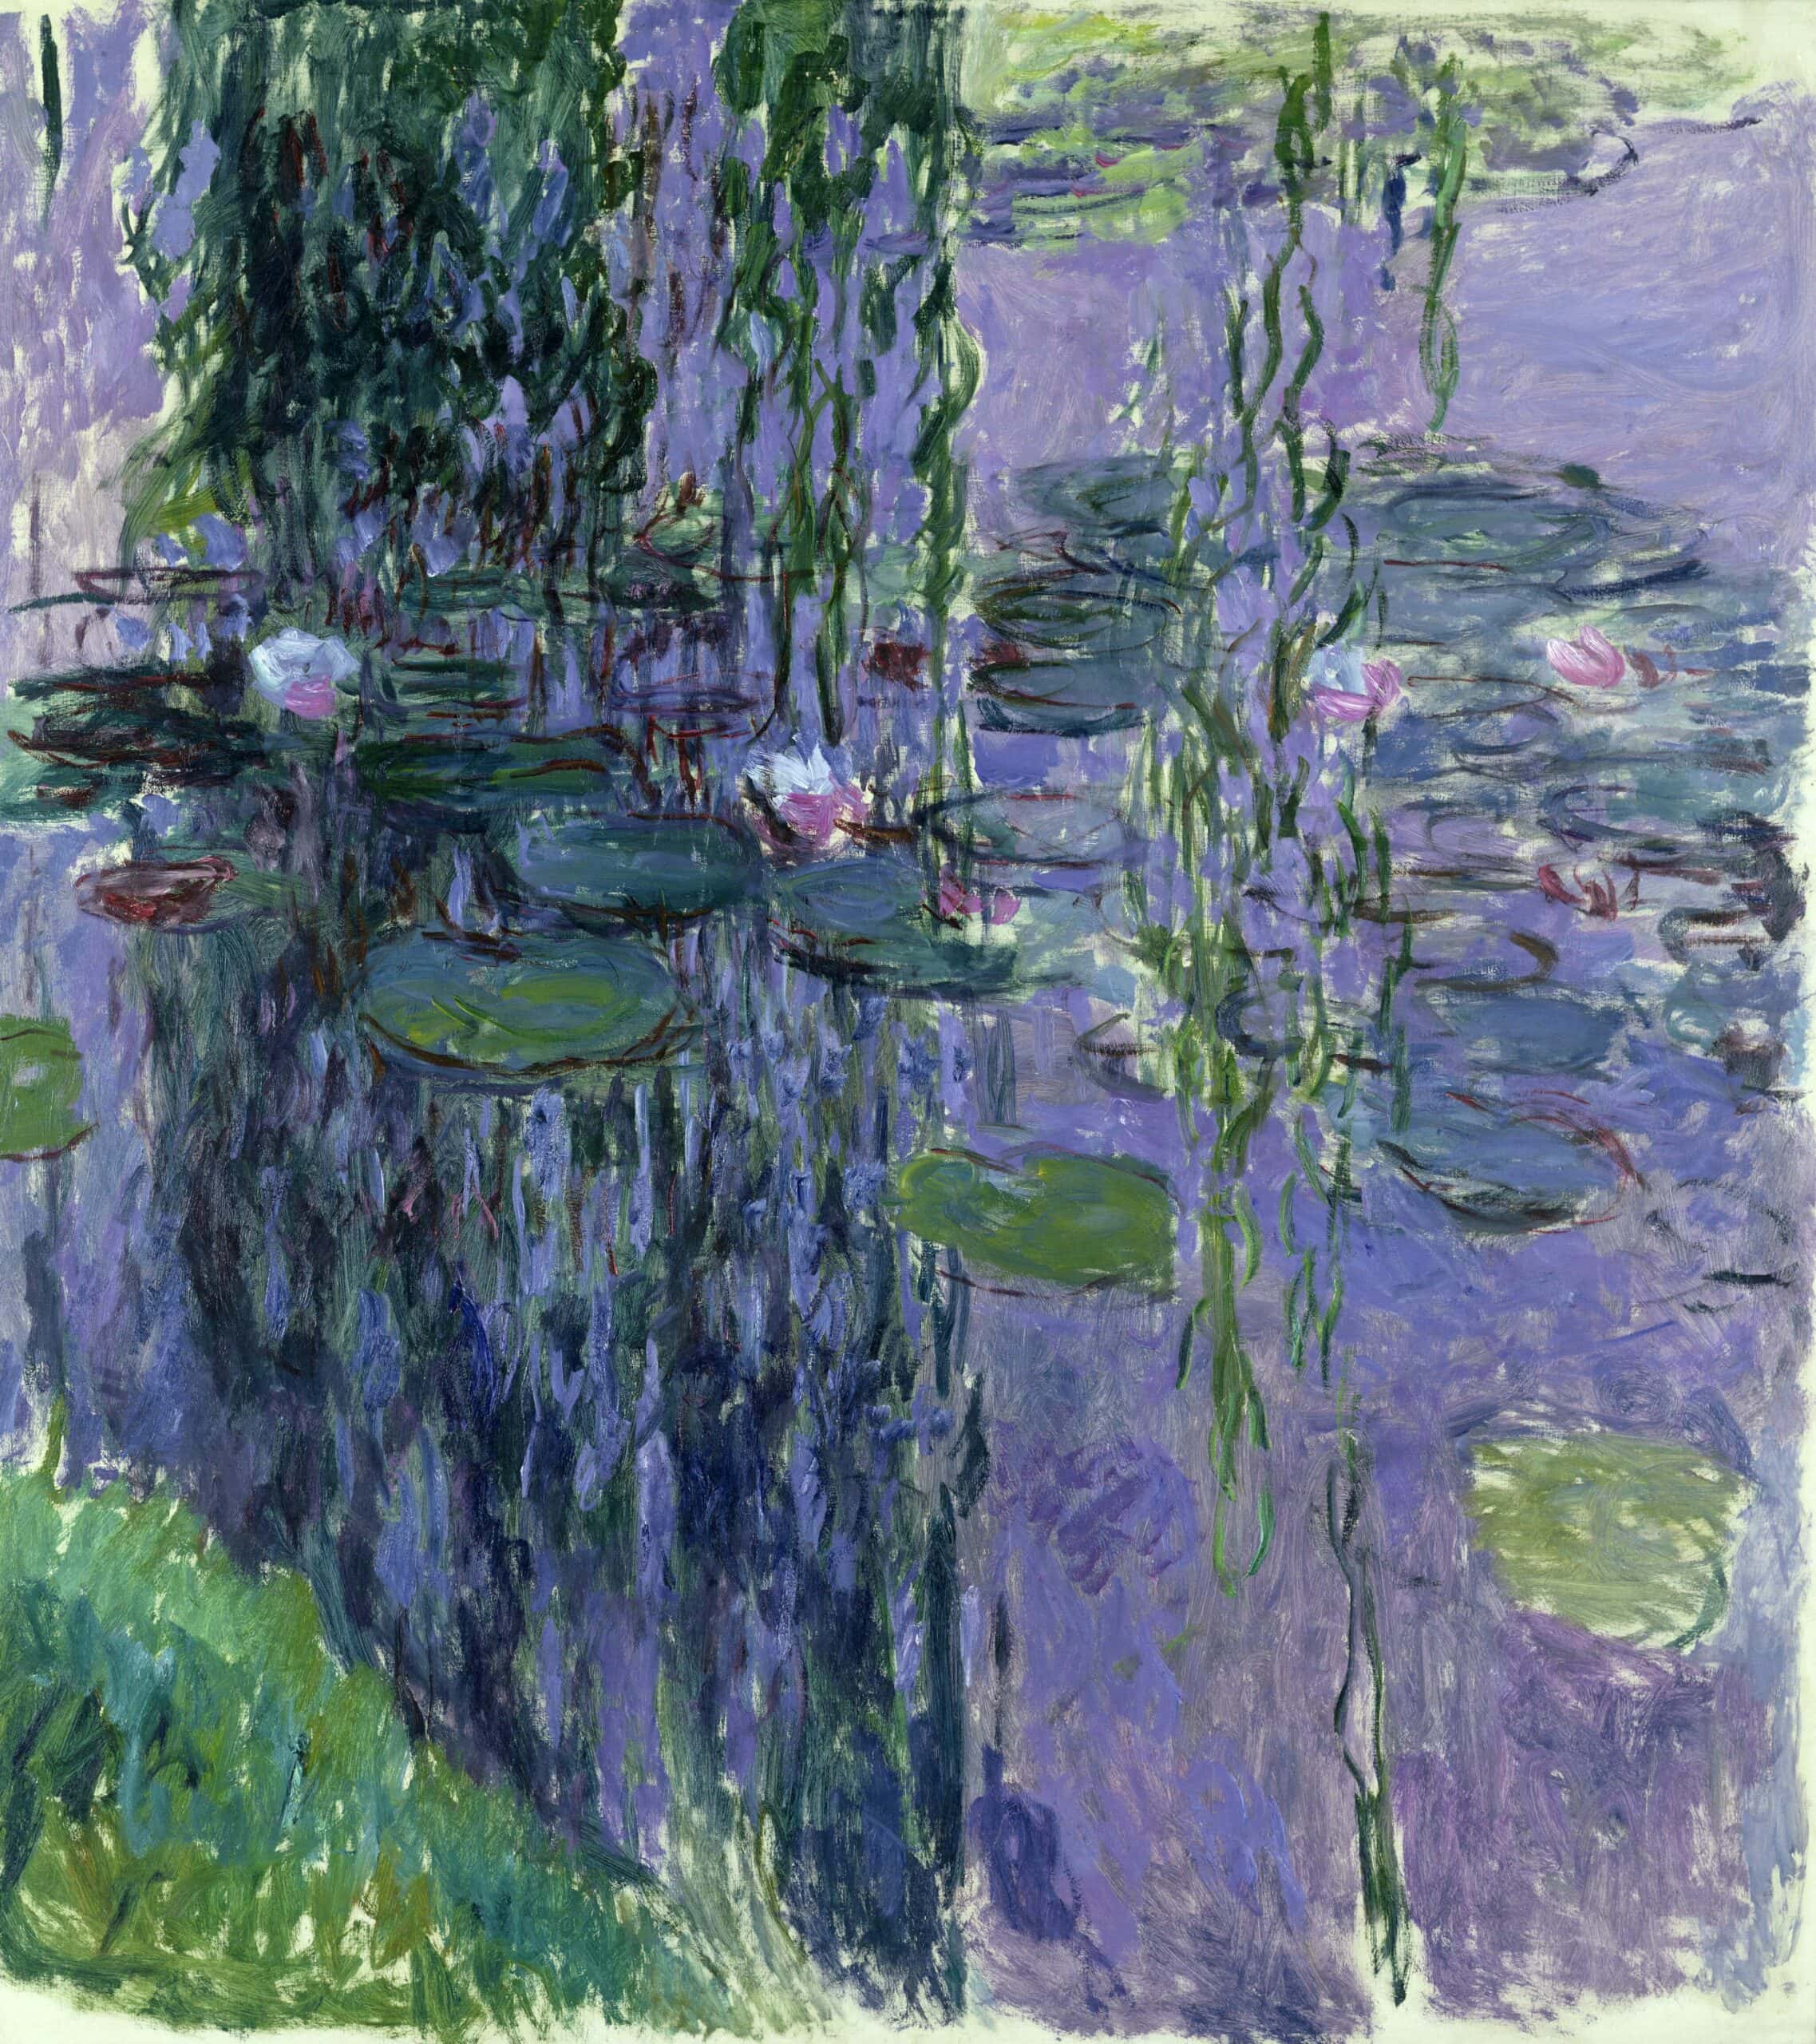 Monet – Mitchell exhibition at the Louis Vuitton Foundation 